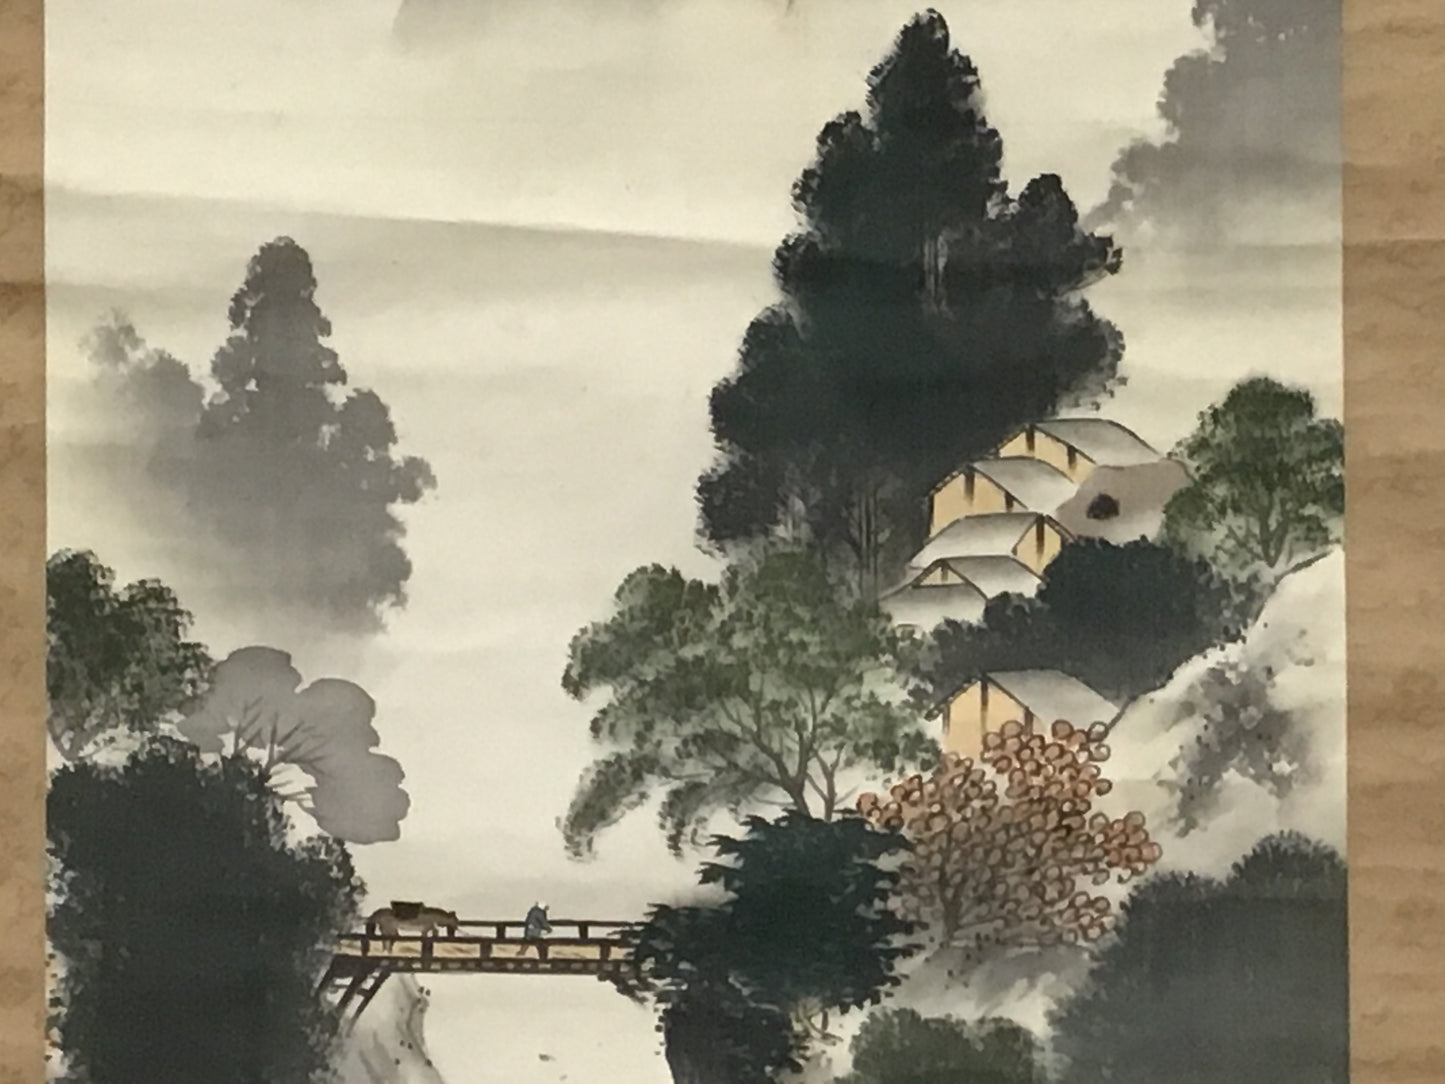 Y2182 KAKEJIKU Landscape signed 186x51cm Japanese hanging scroll interior